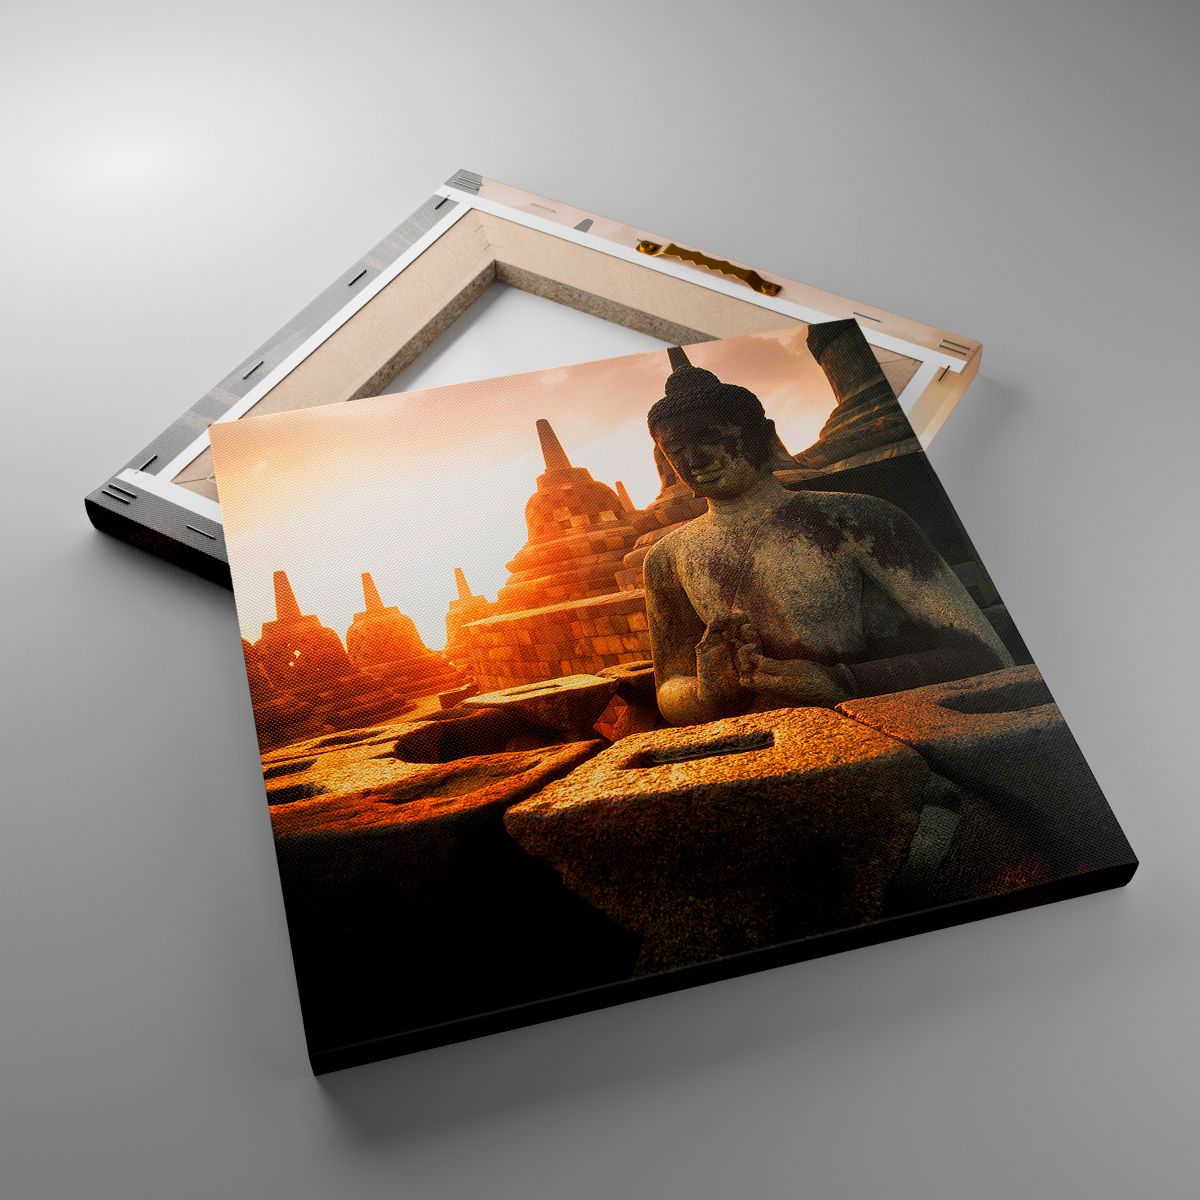 Leinwandbild Asien, Leinwandbild Buddha, Leinwandbild Borobudur, Leinwandbild Kultur, Leinwandbild Meditation